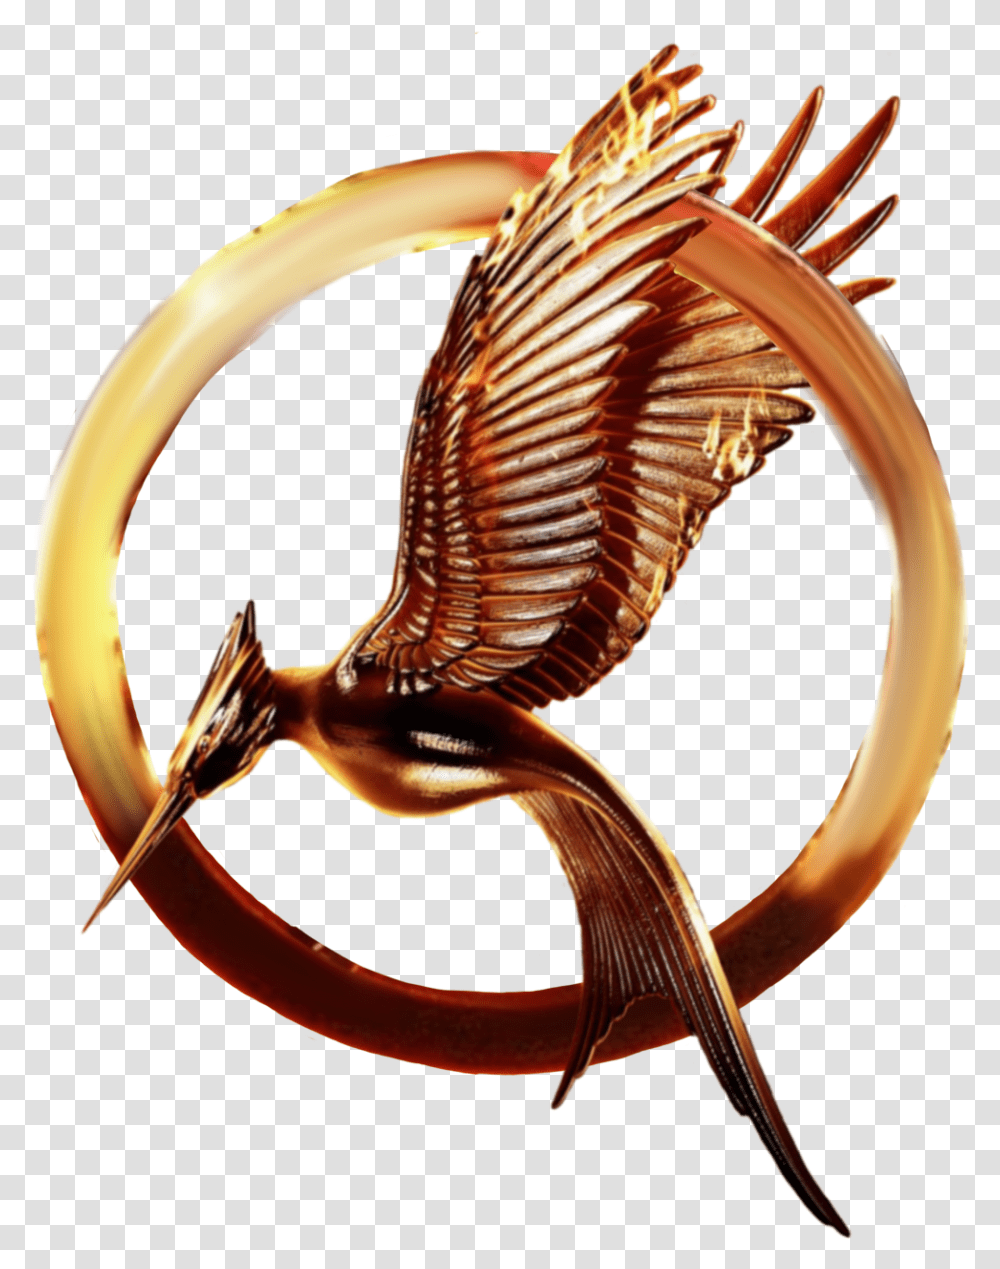 Catching Fire Mockingjay The Hunger Hunger Games Catching Fire Pin, Bird, Animal, Skeleton, Antler Transparent Png